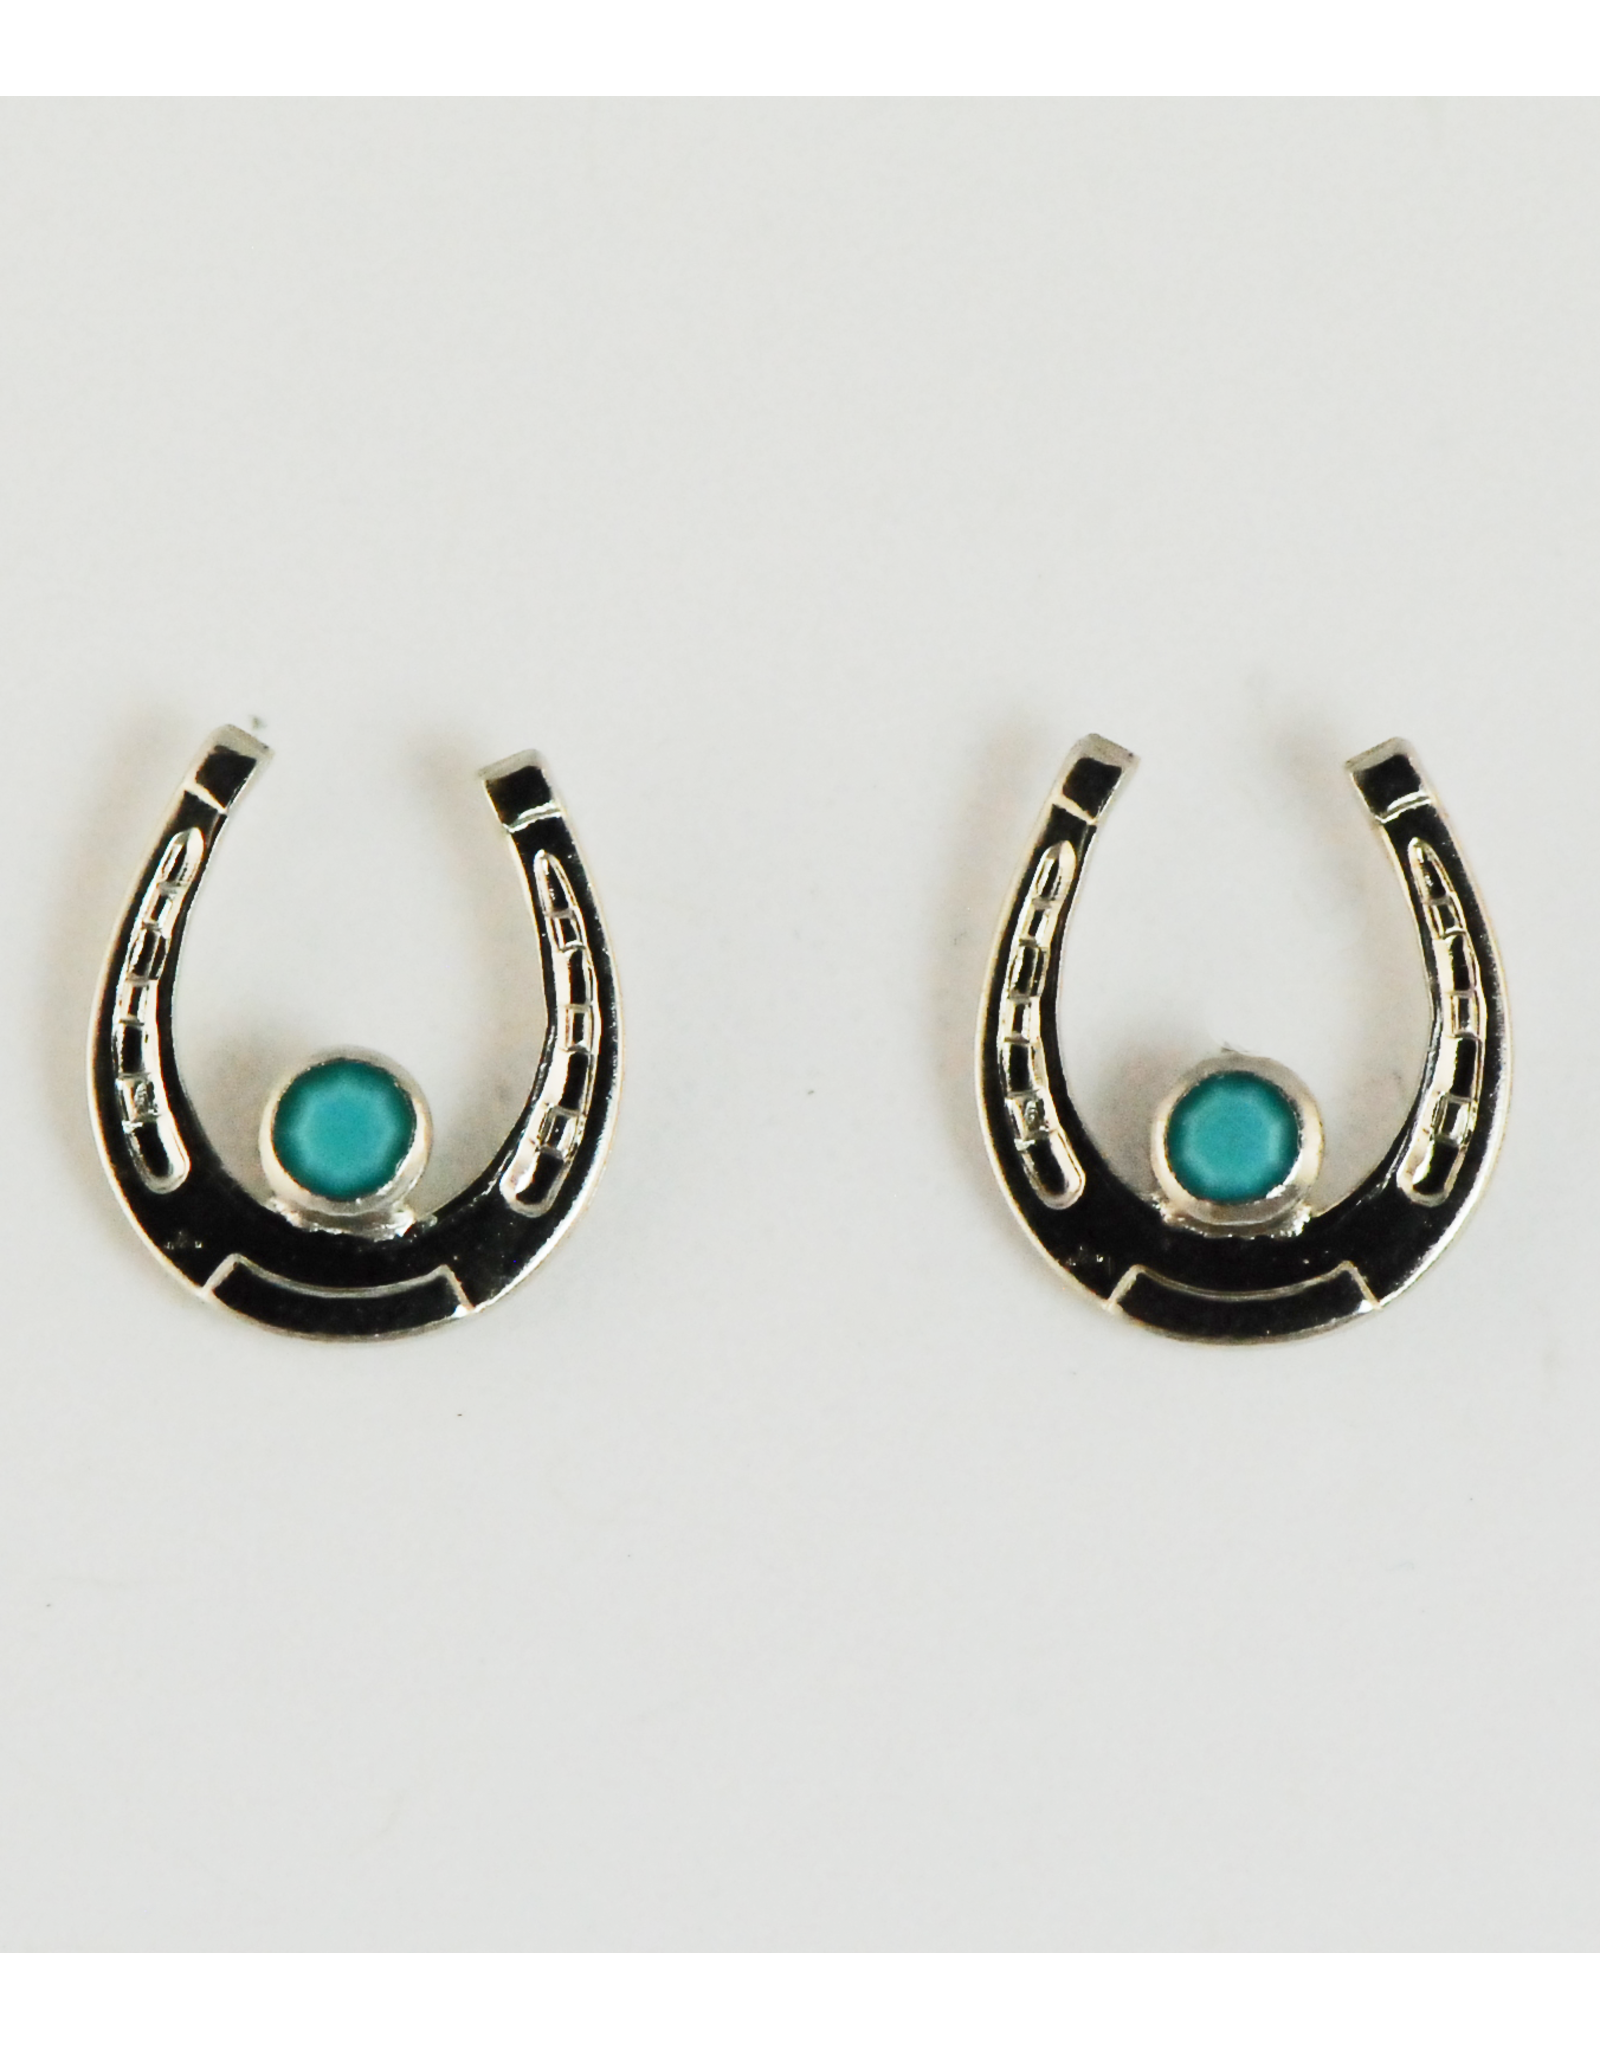 Finishing Touch Earrings HER3108 Horseshoe with Immitation Turquoise Stone